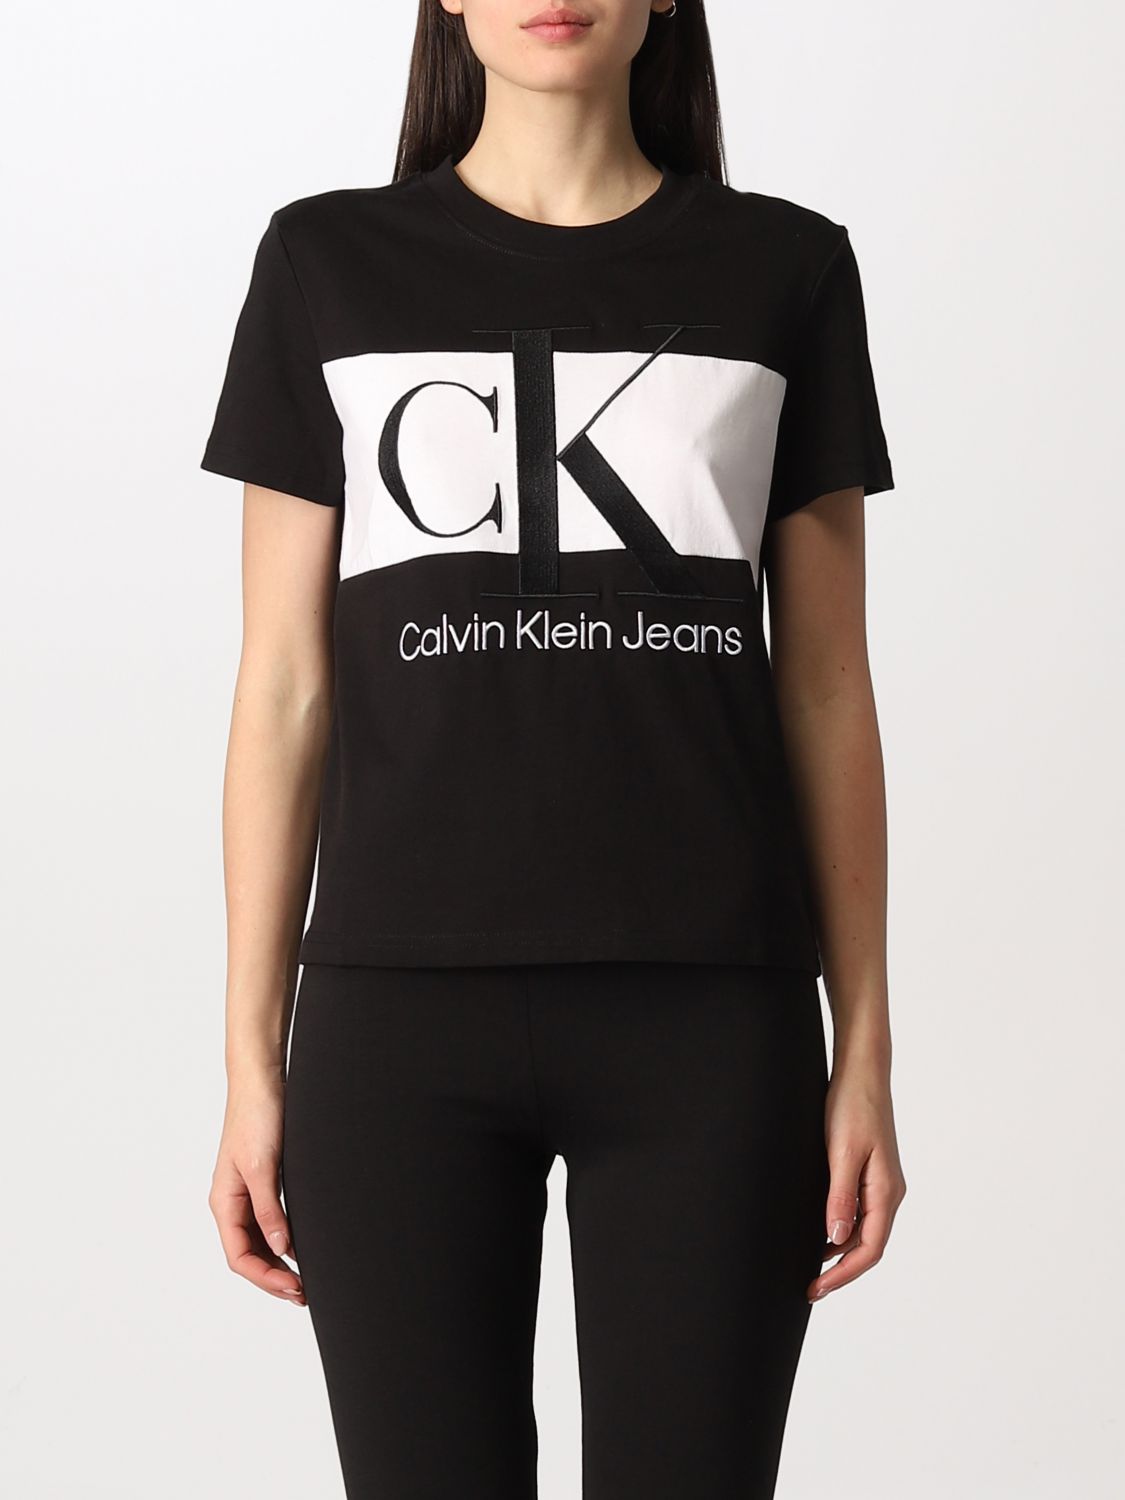 CALVIN KLEIN JEANS: T-shirt women - Black | Calvin Klein Jeans t-shirt  J20J218258 online on 